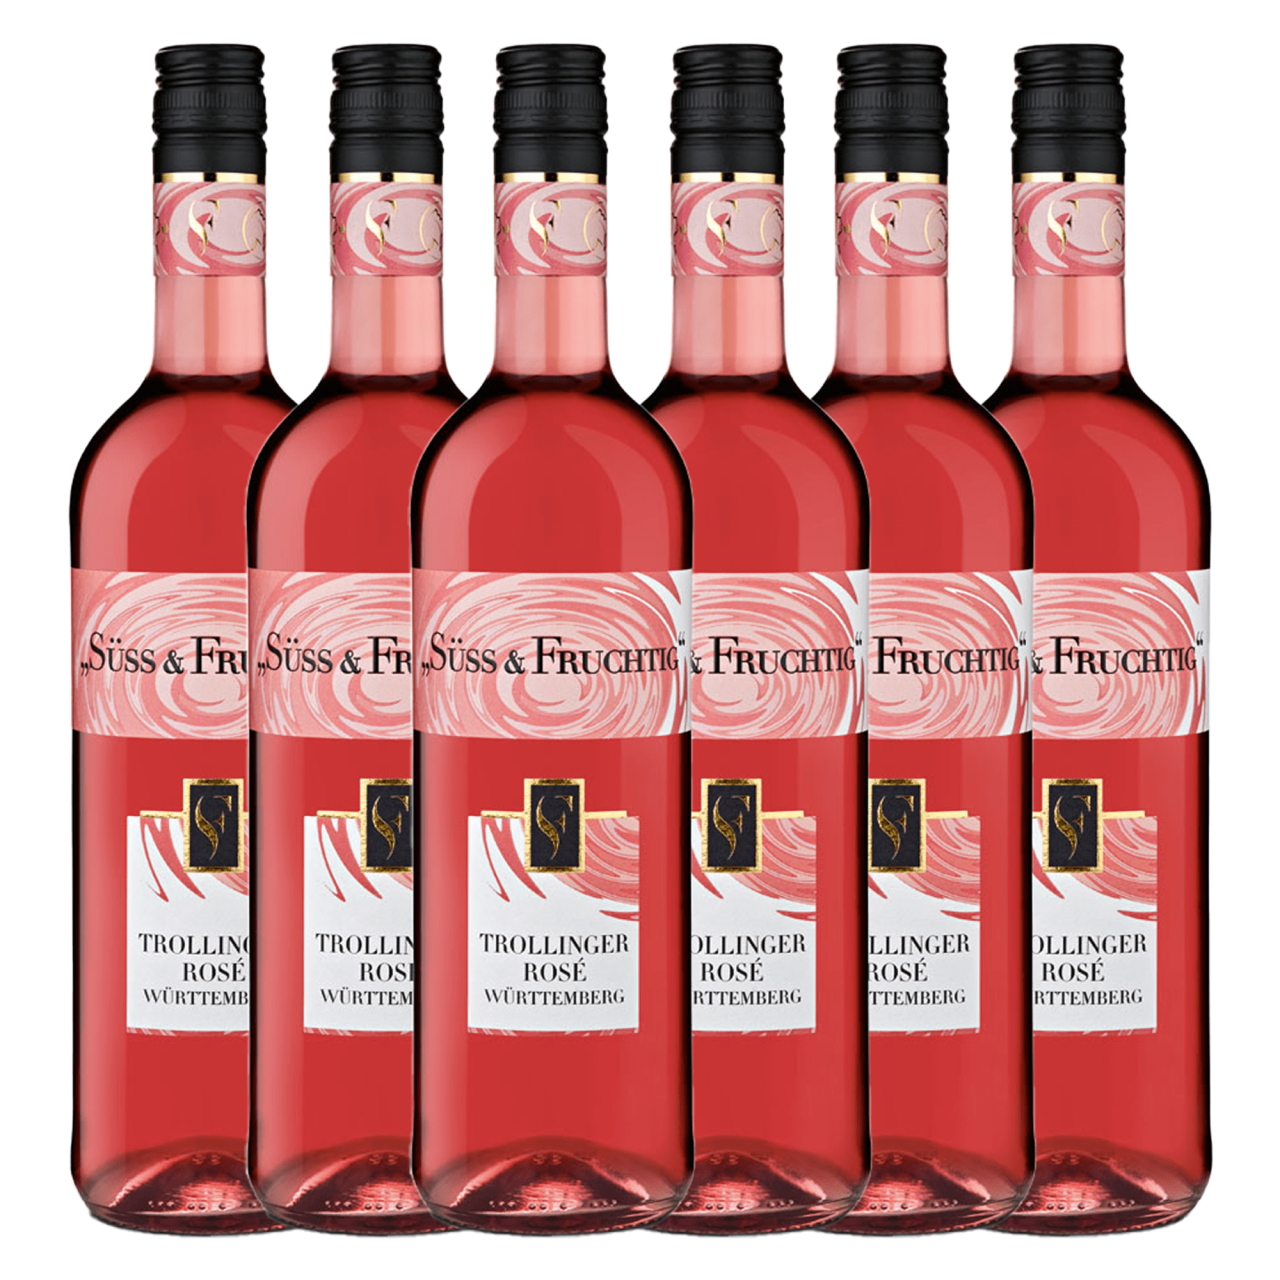 Süss & Fruchtig Trollinger Rosé Qualitätswein süß 0,75L 6er Karton Württembergische WZG Norma24 DE